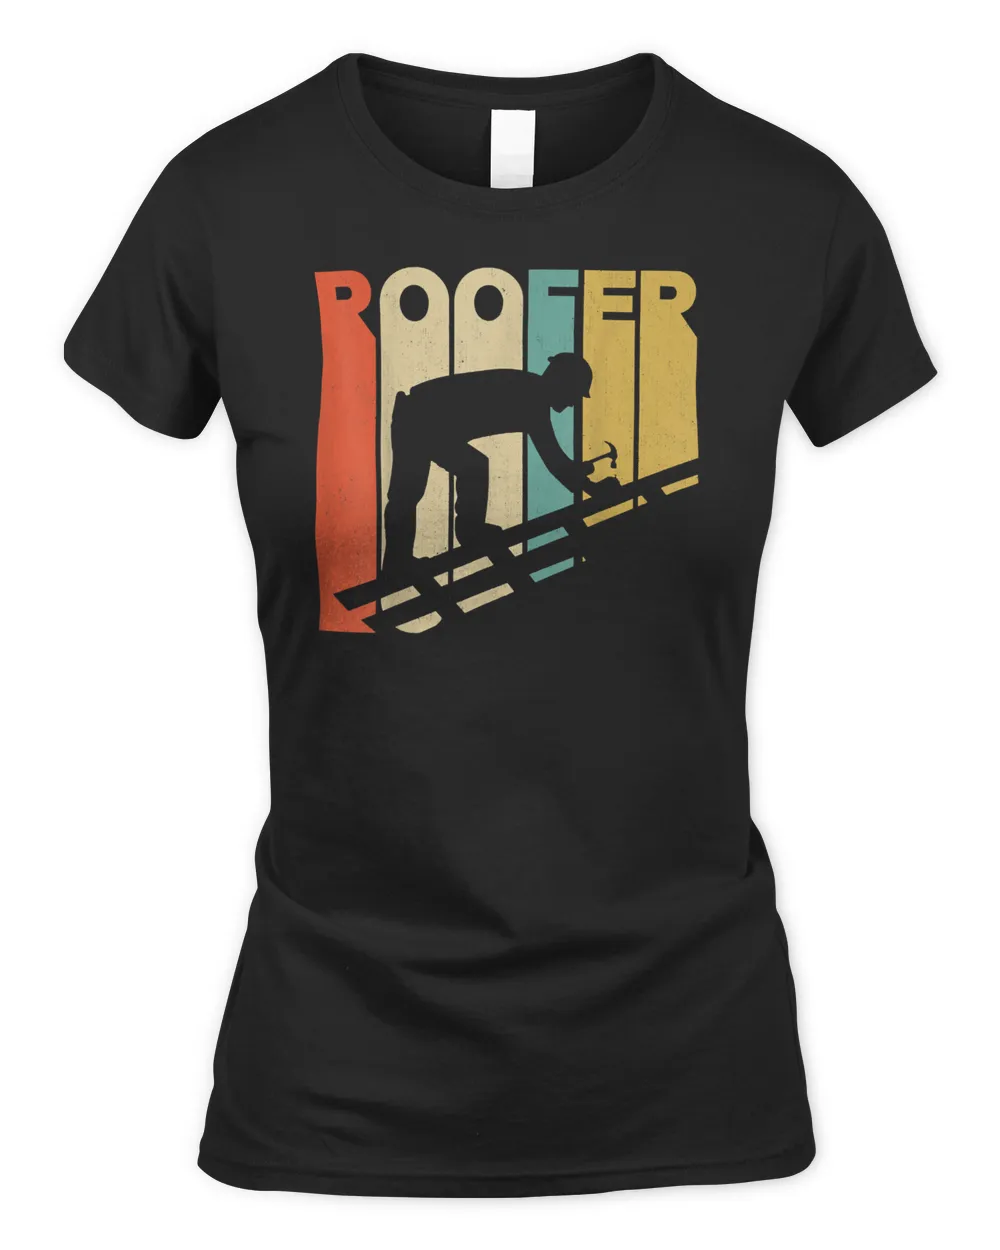 Vintage Retro Style Roofer Silhouette T-Shirt